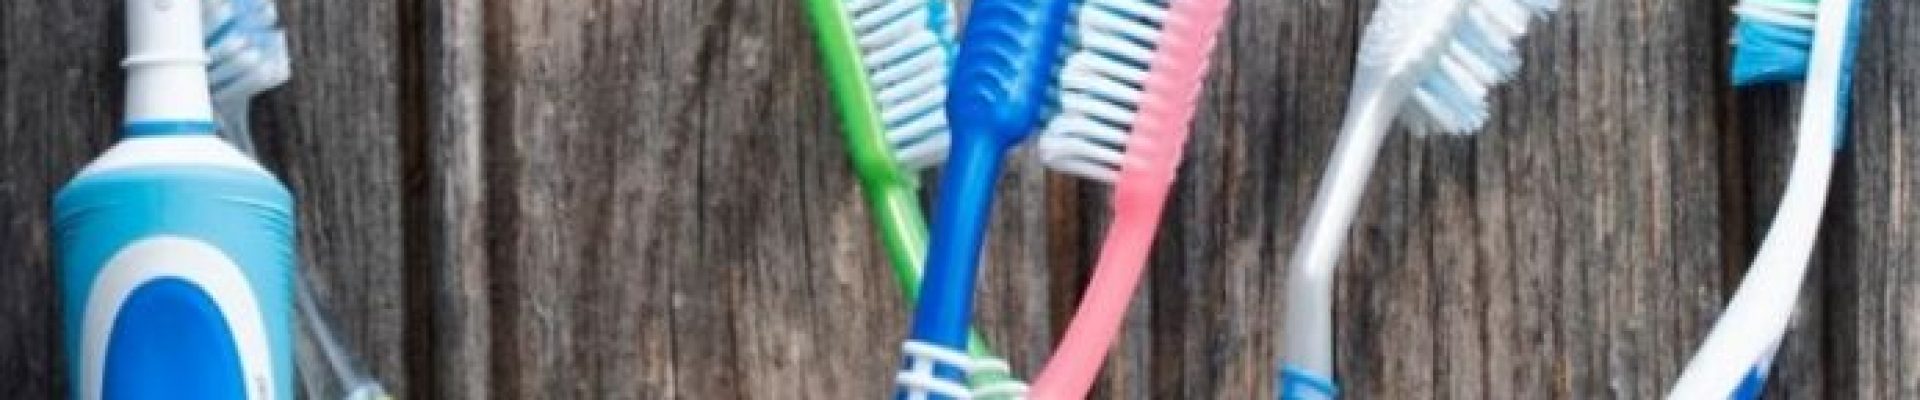 importancia del cepillo de dientes clinica dental achutegui amara donostia san sebastian dentistas